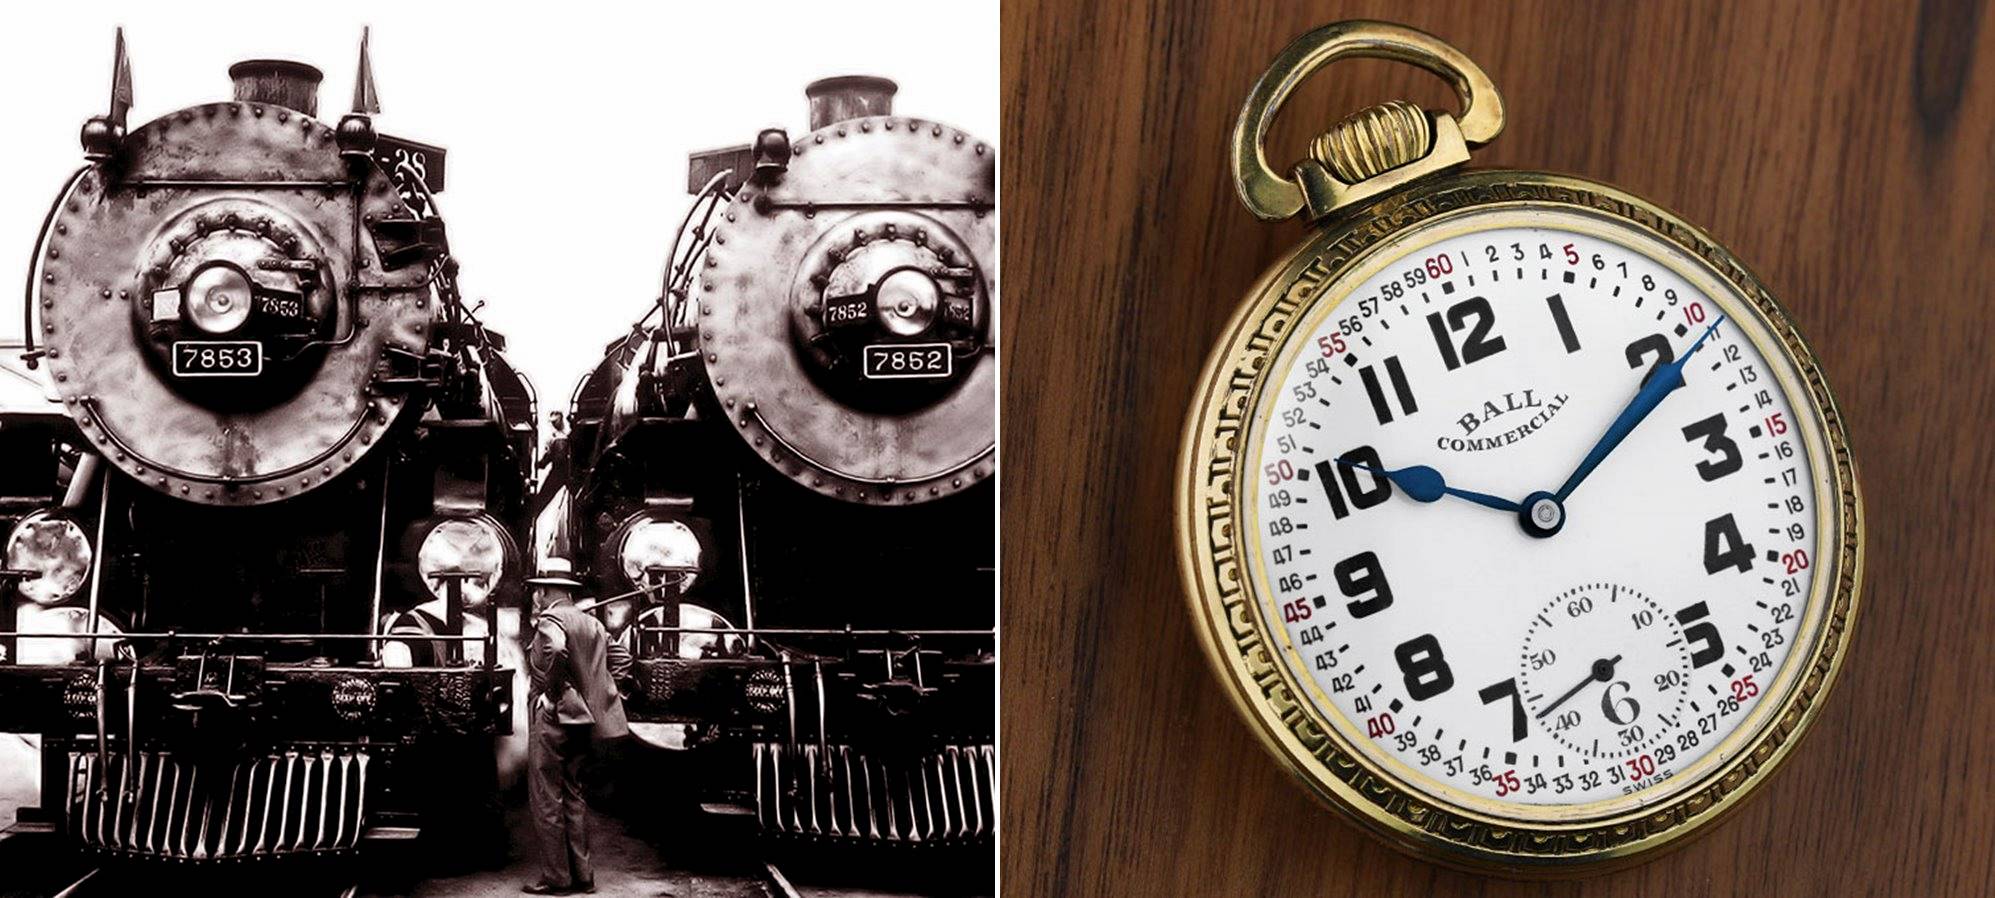 Ball Trainmaster Railroad Standard 130 Years - kolejowy rodowód i wygląd vintage